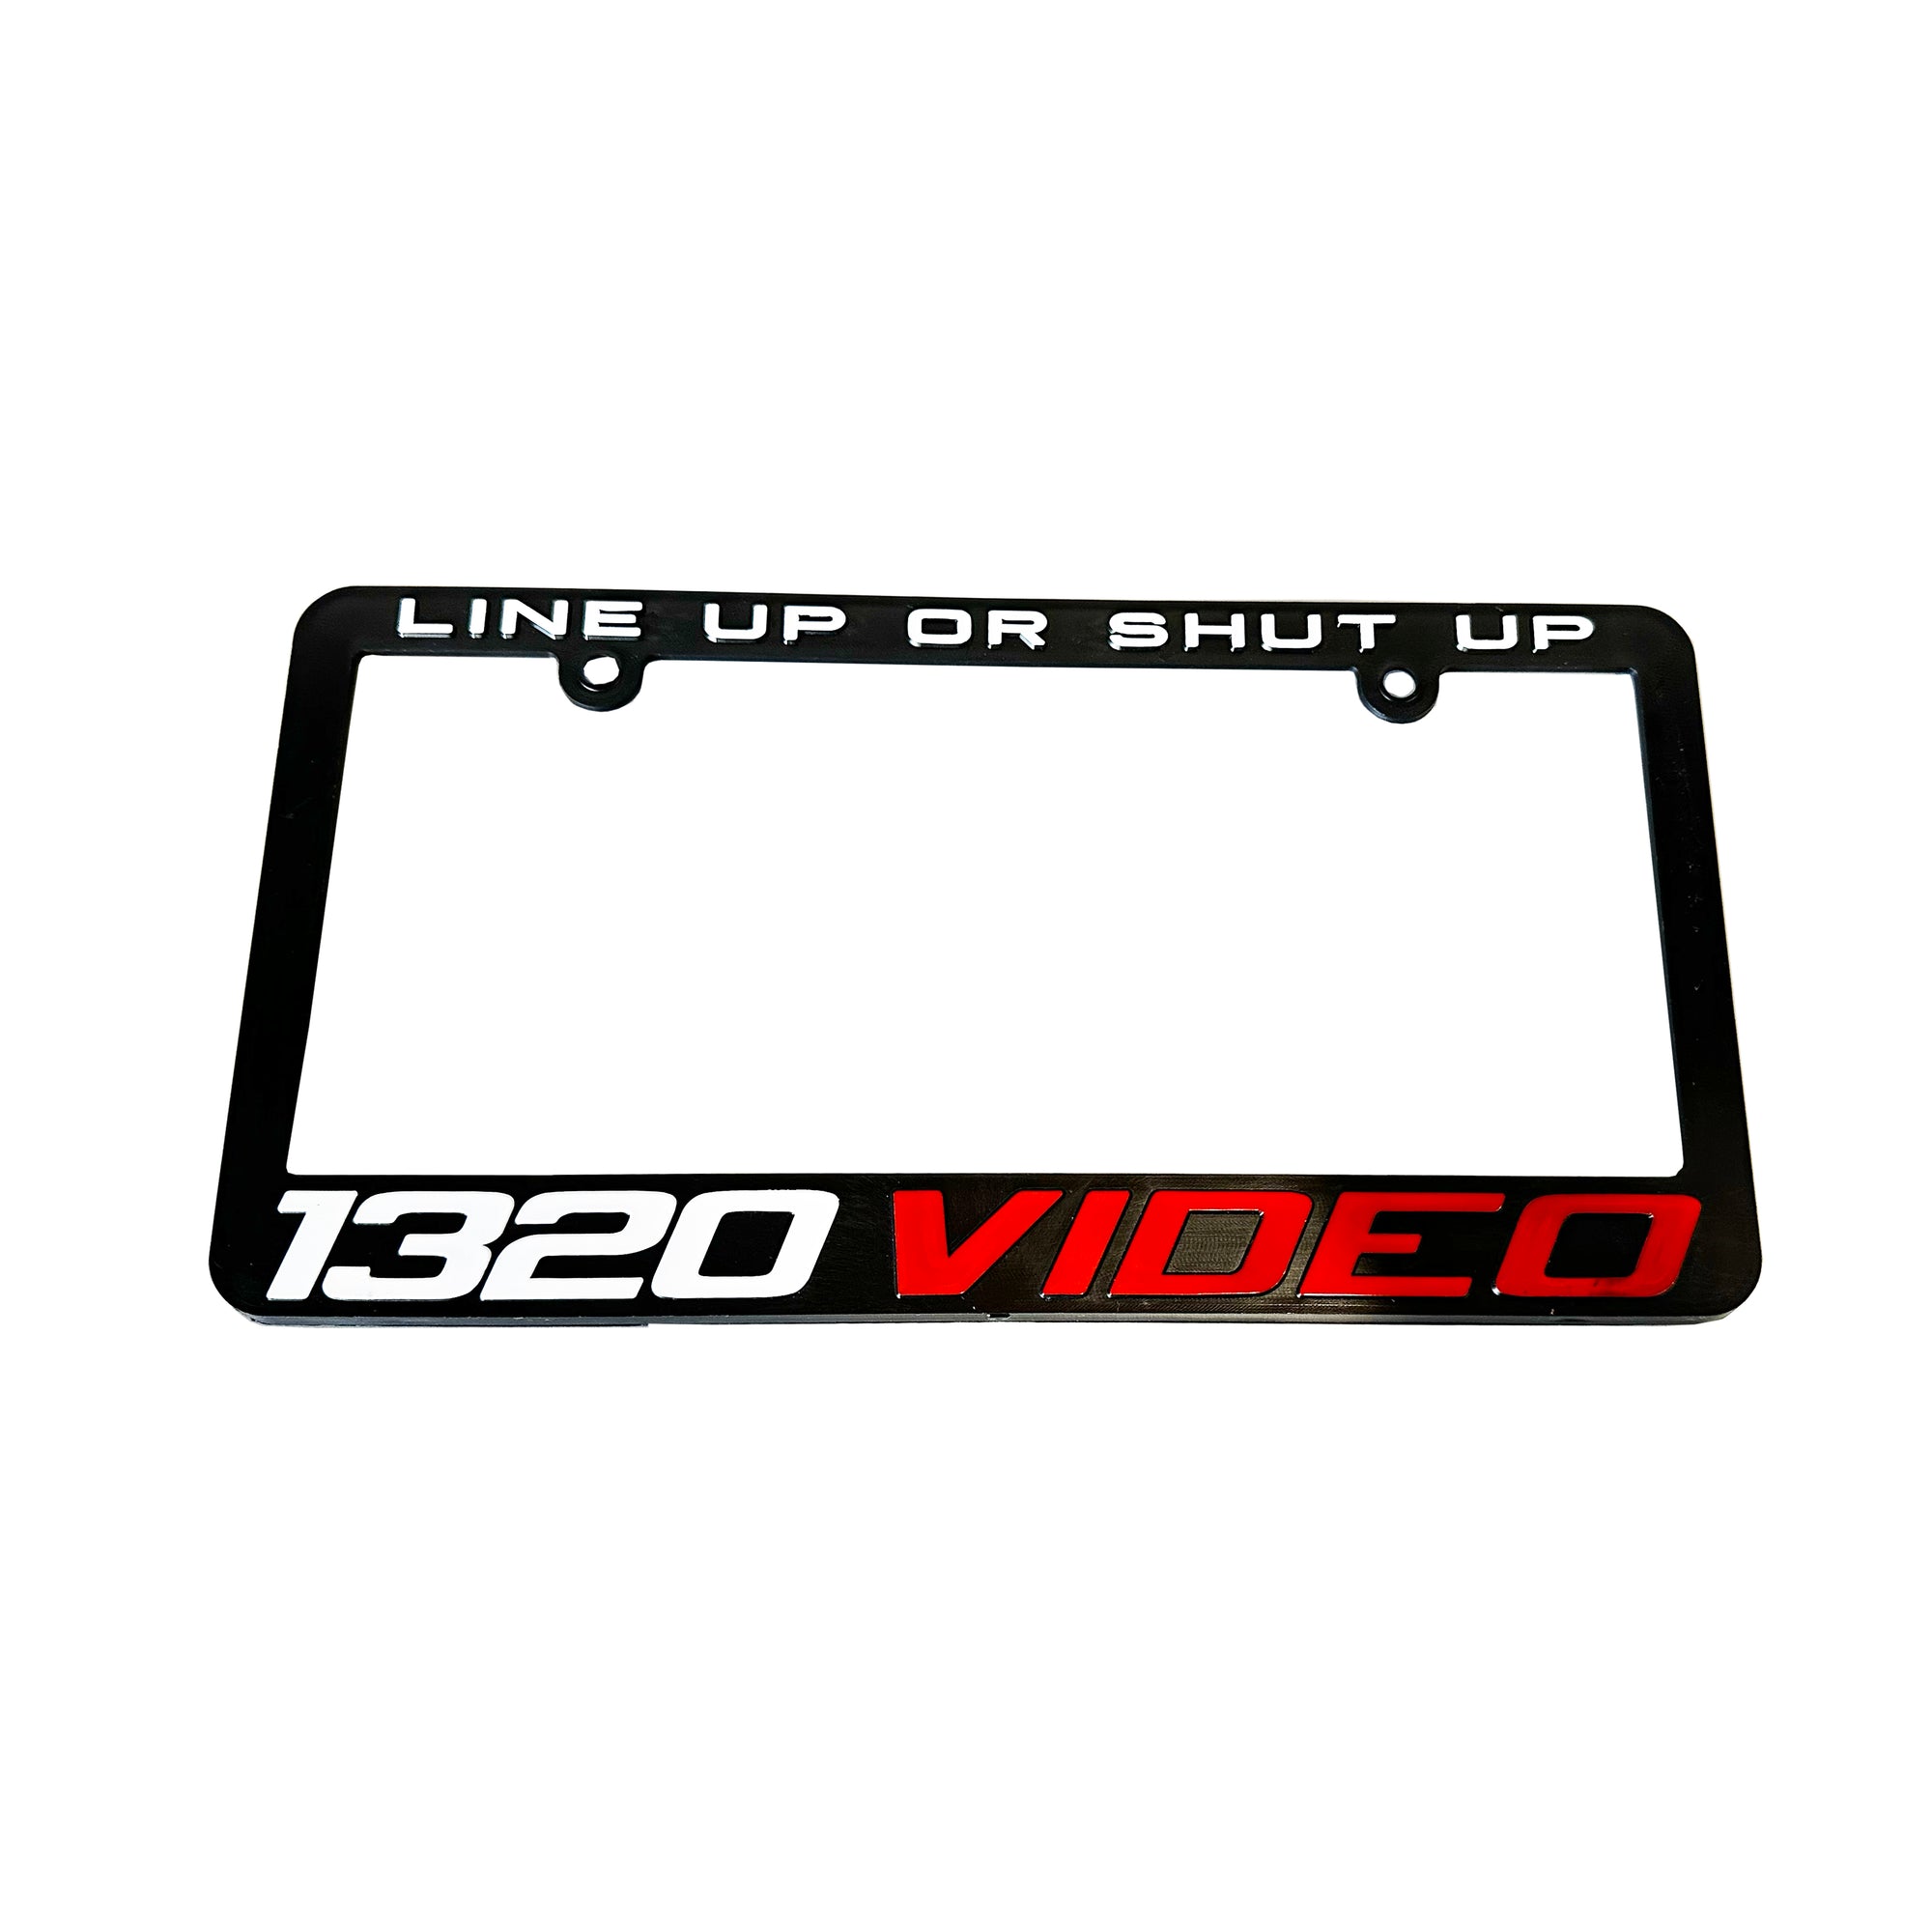 1320Video Line Up Or Shut Up License Plate Frame